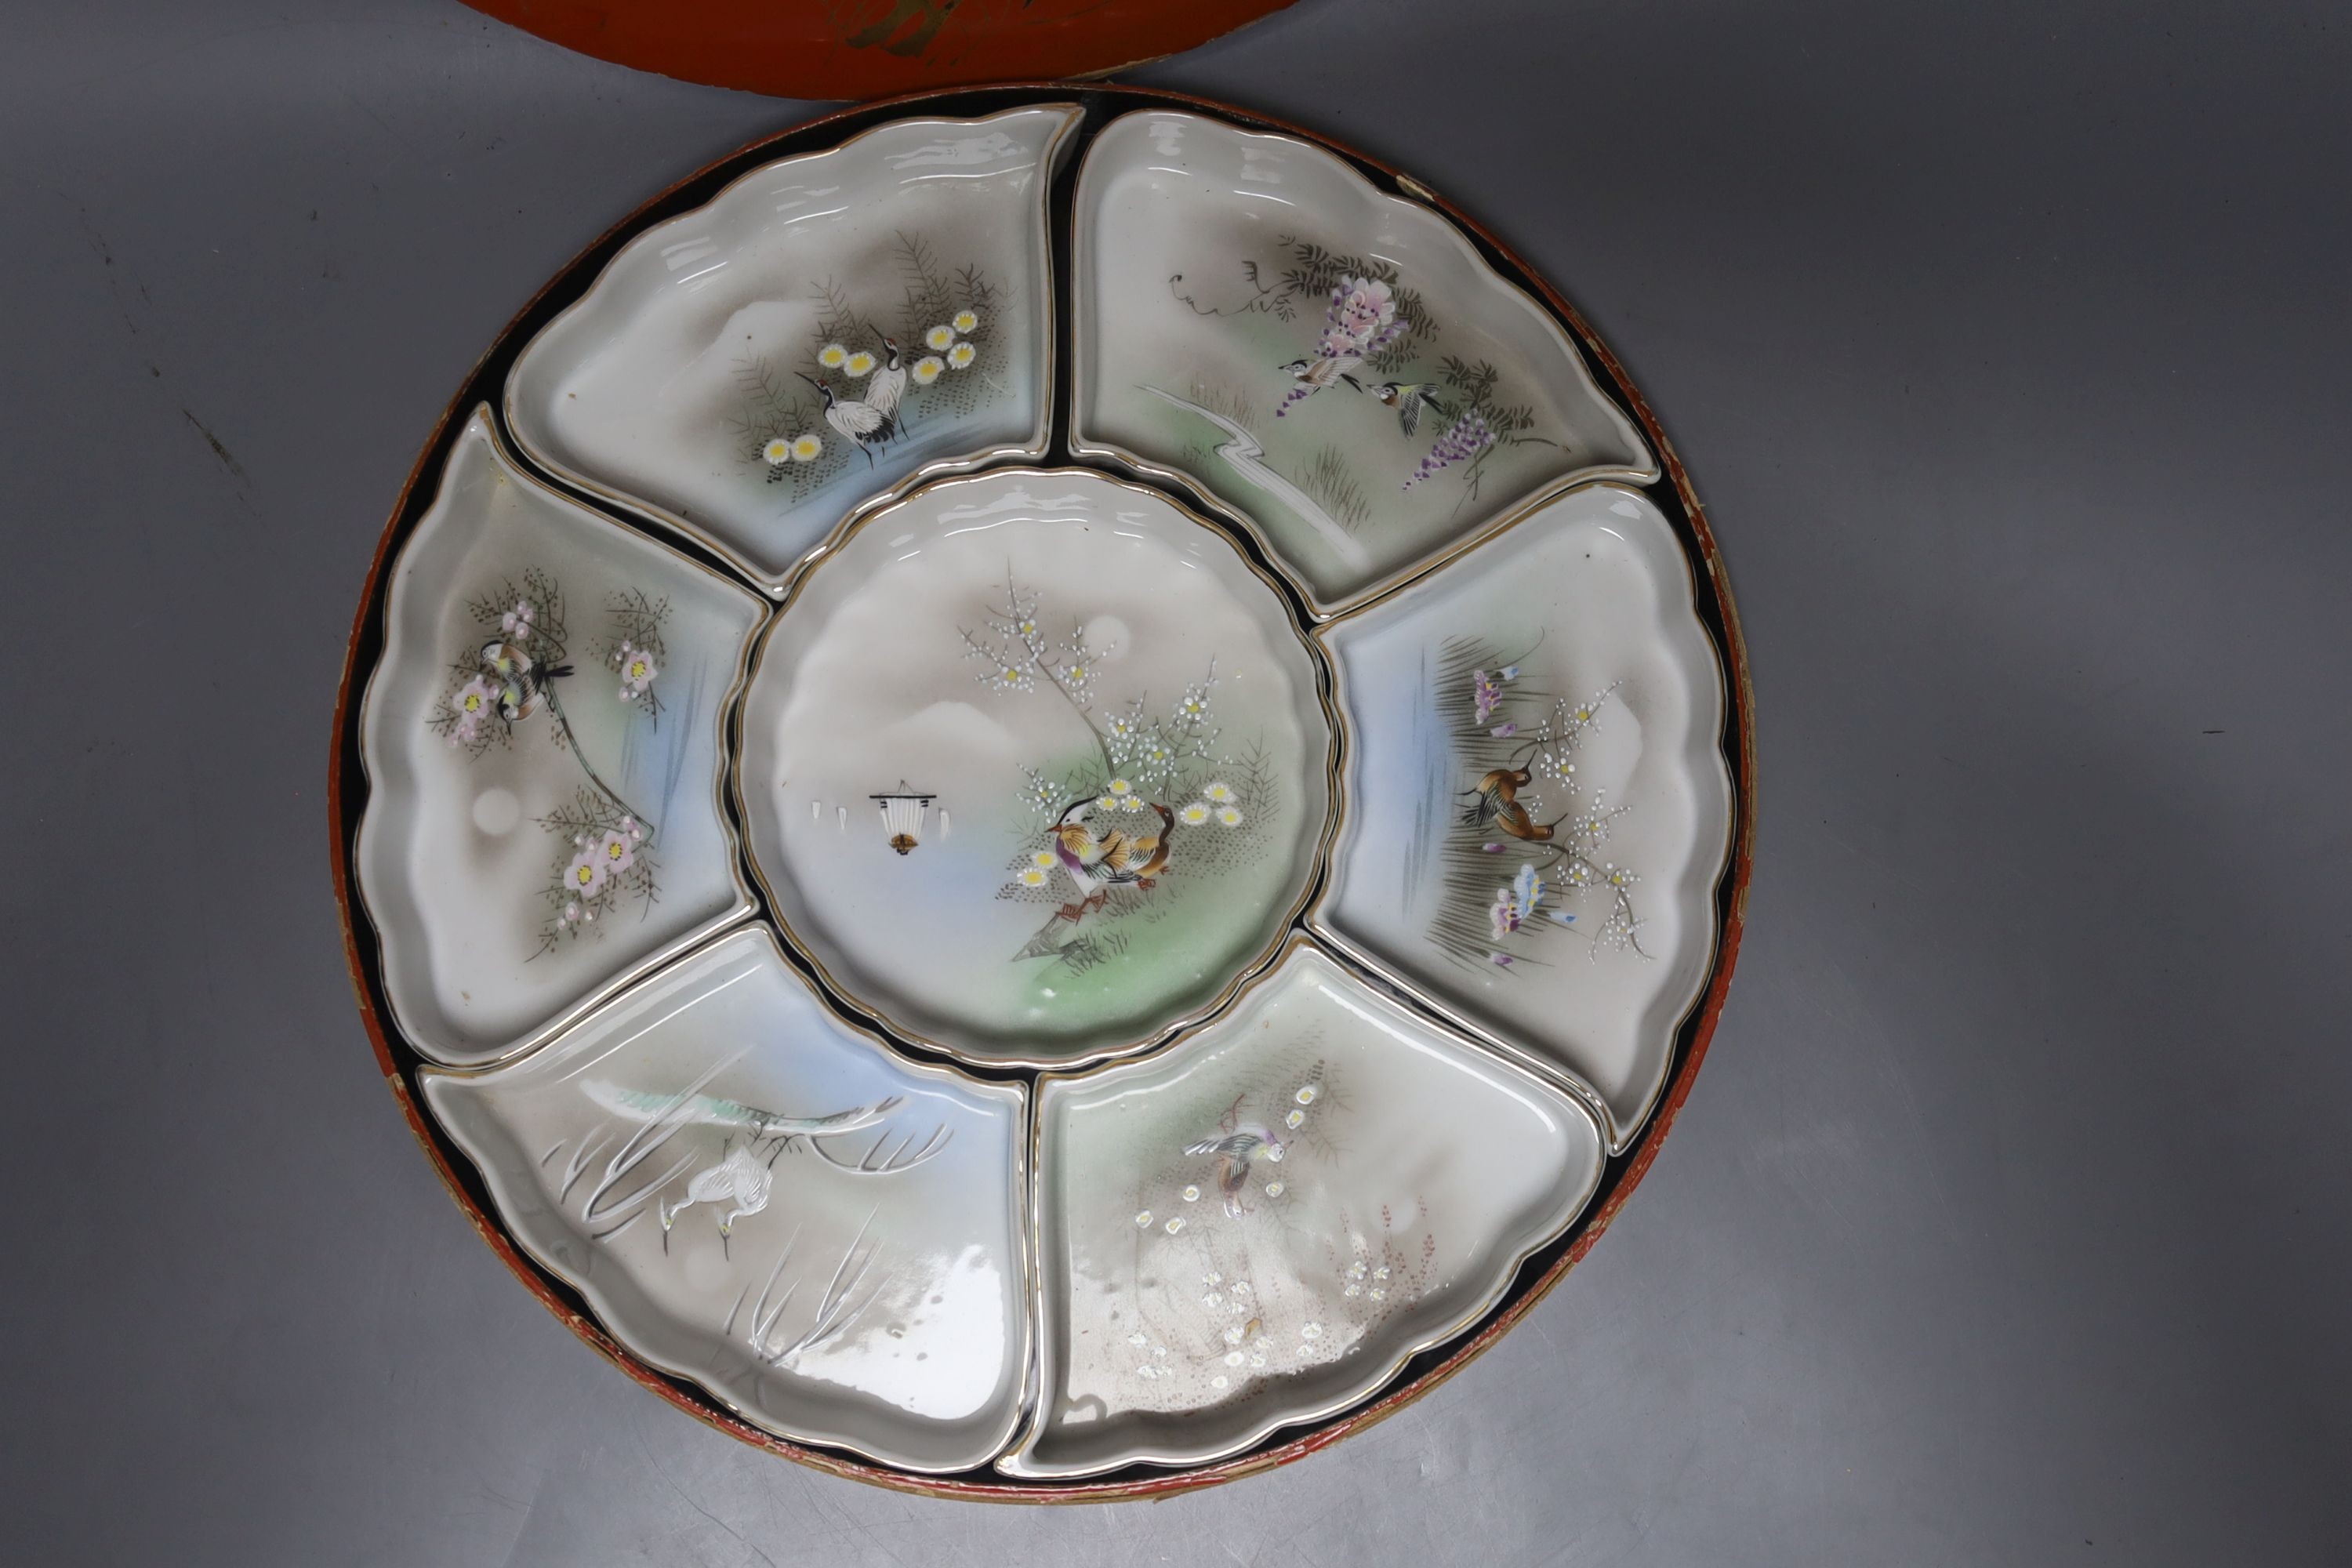 A Japanese porcelain 7 piece supper set in a lacquer box, 31.5cm